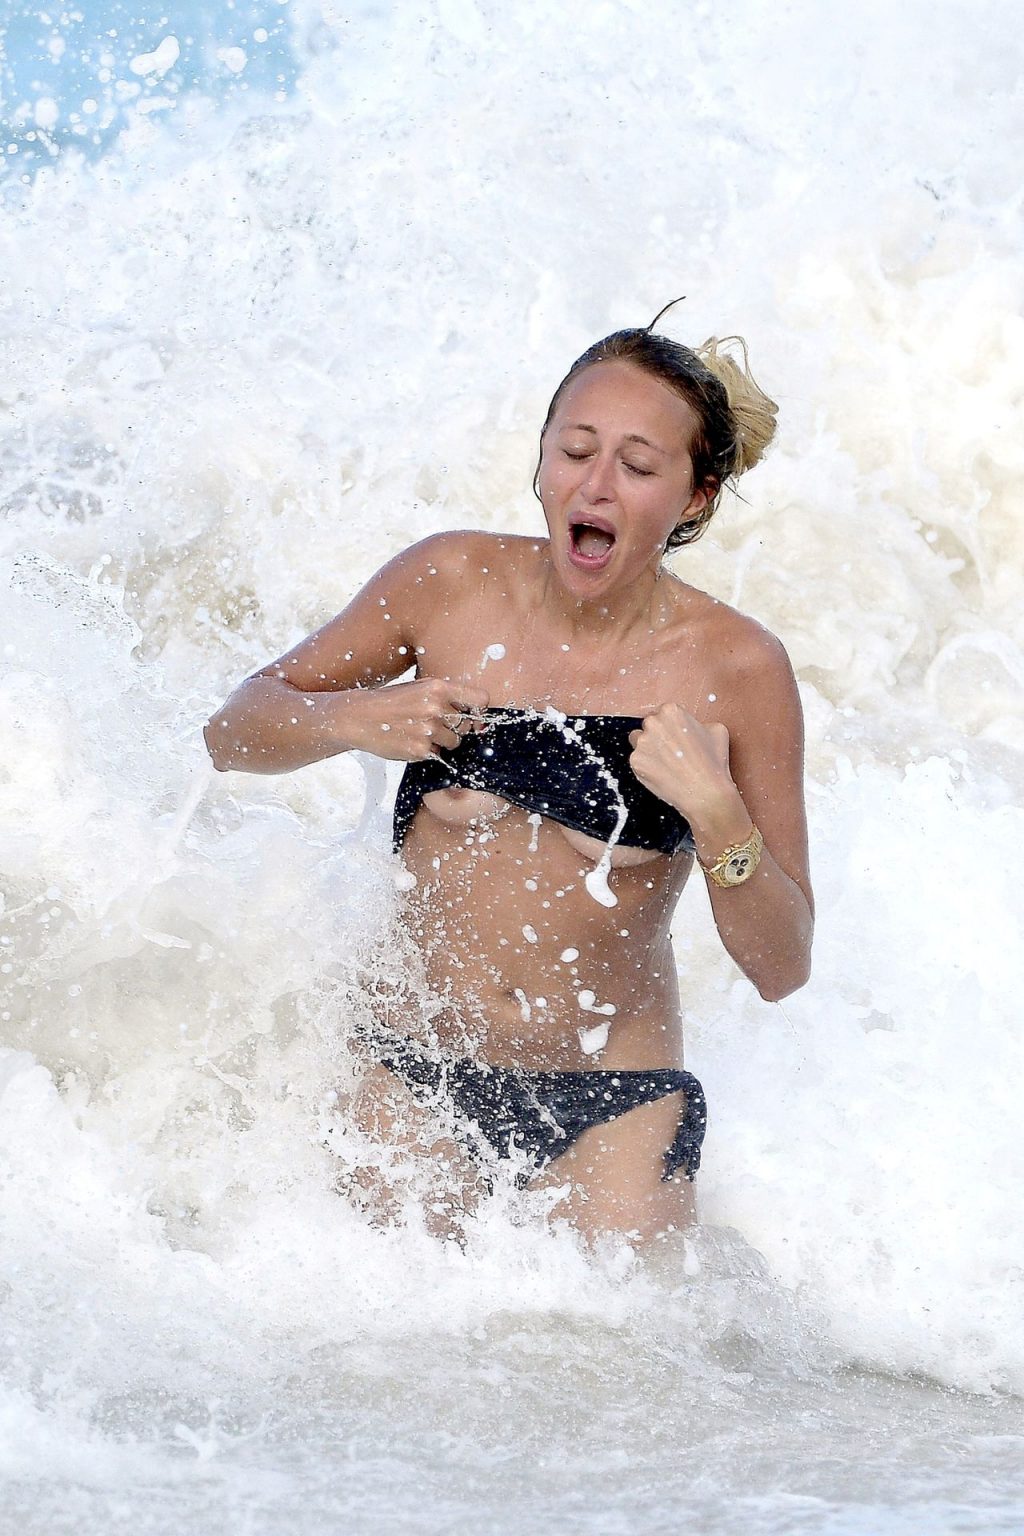 Lana Scolaro Shows Her Nude Tits on the Beach (12 Photos)